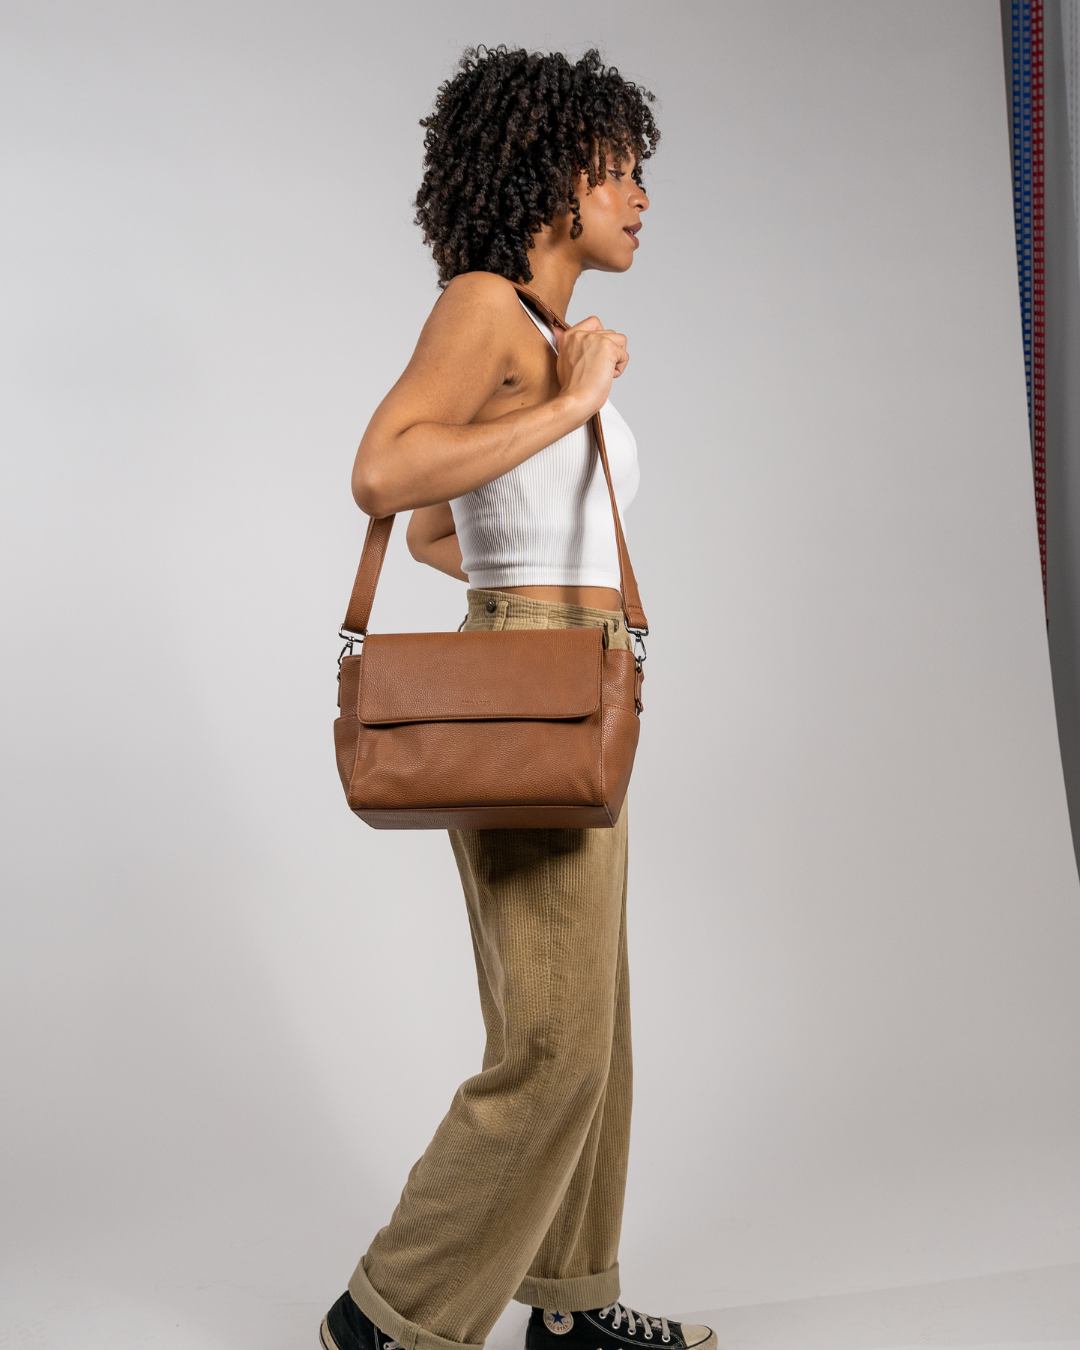 Bobbi Modular Shoulder Camera Bag (Tan)